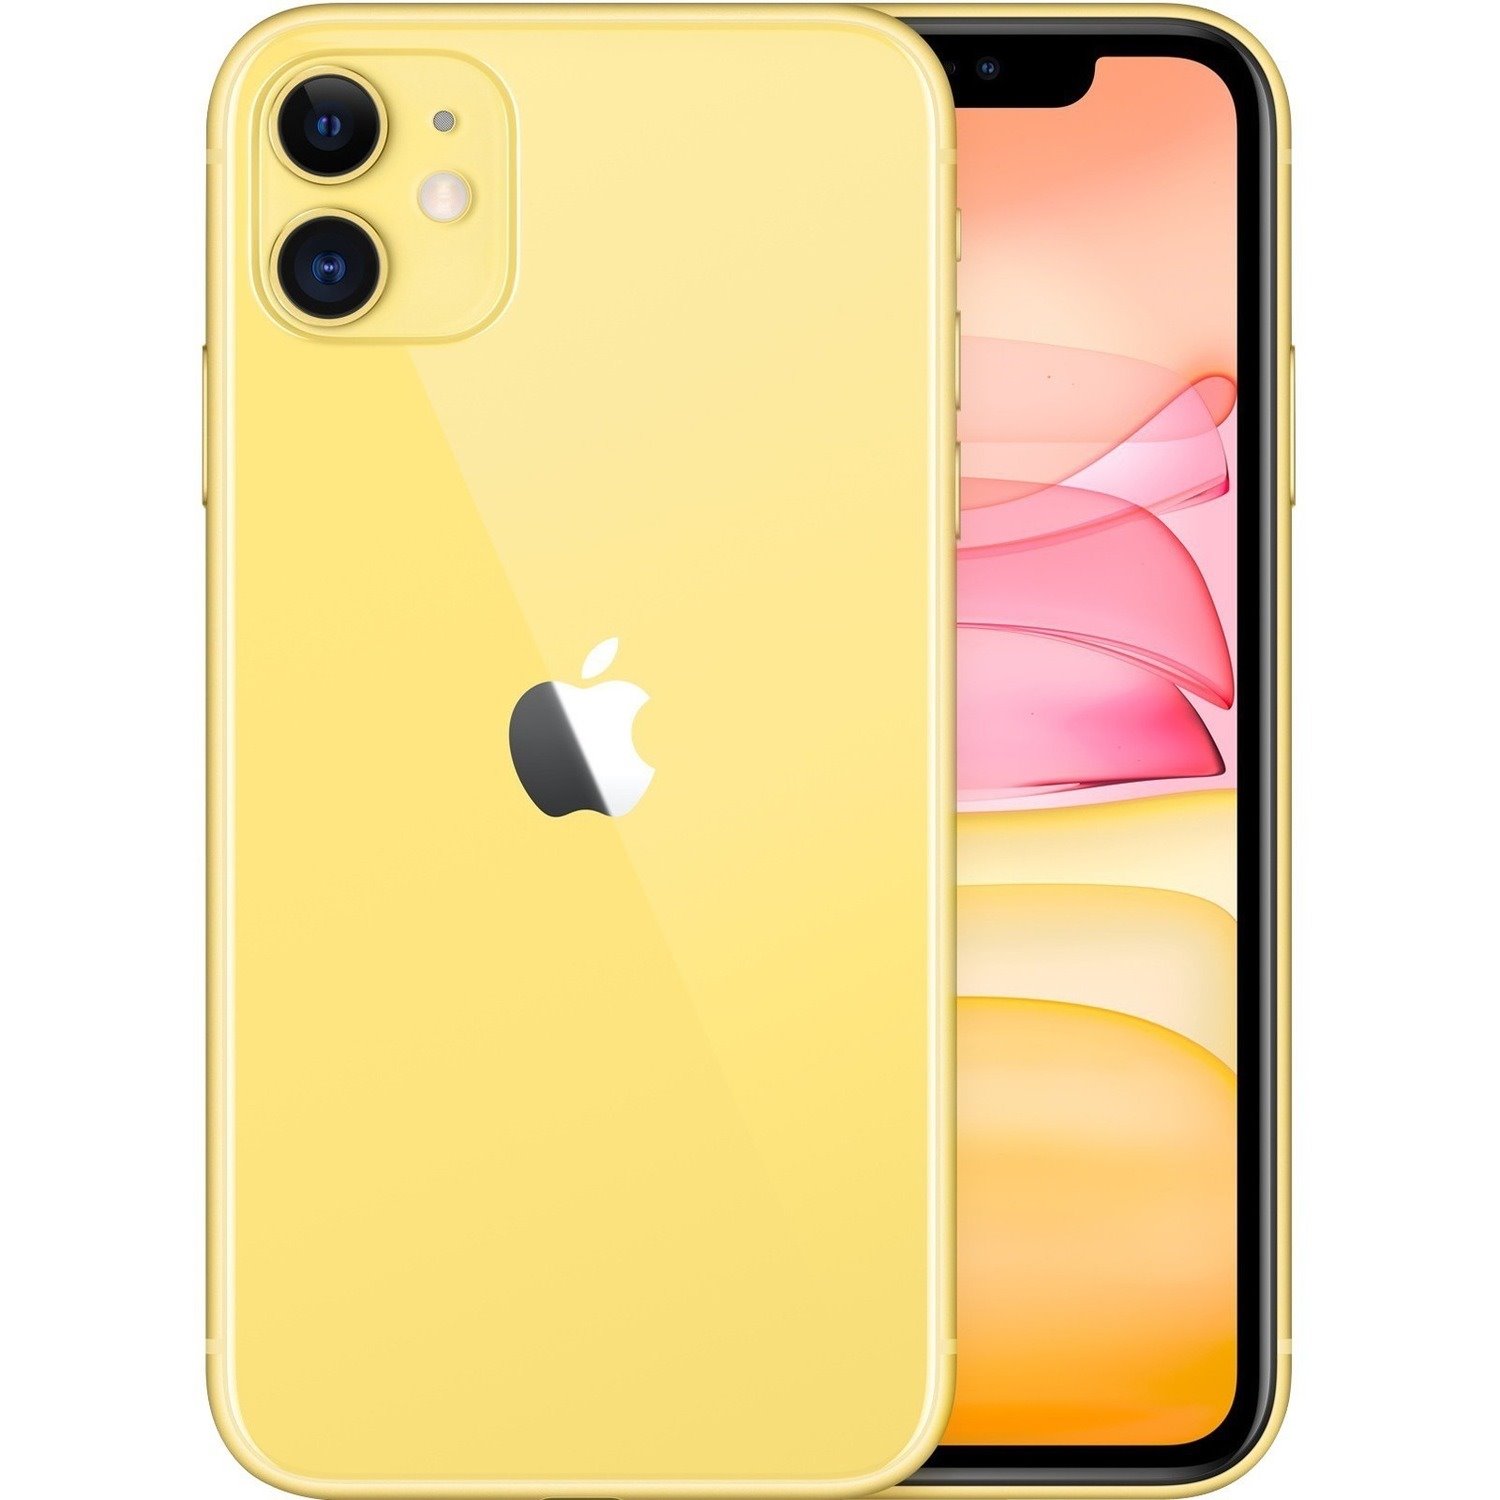 Apple Apple iPhone 11 128 GB Smartphone - 15.5 cm (6.1") LCD 1792 x 828 - Hexa-core (LightningDual-core (2 Core) 2.65 GHz + Thunder Quad-core (4 Core) 1.80 GHz - 4 GB RAM - iOS 14 - 4G - Yellow